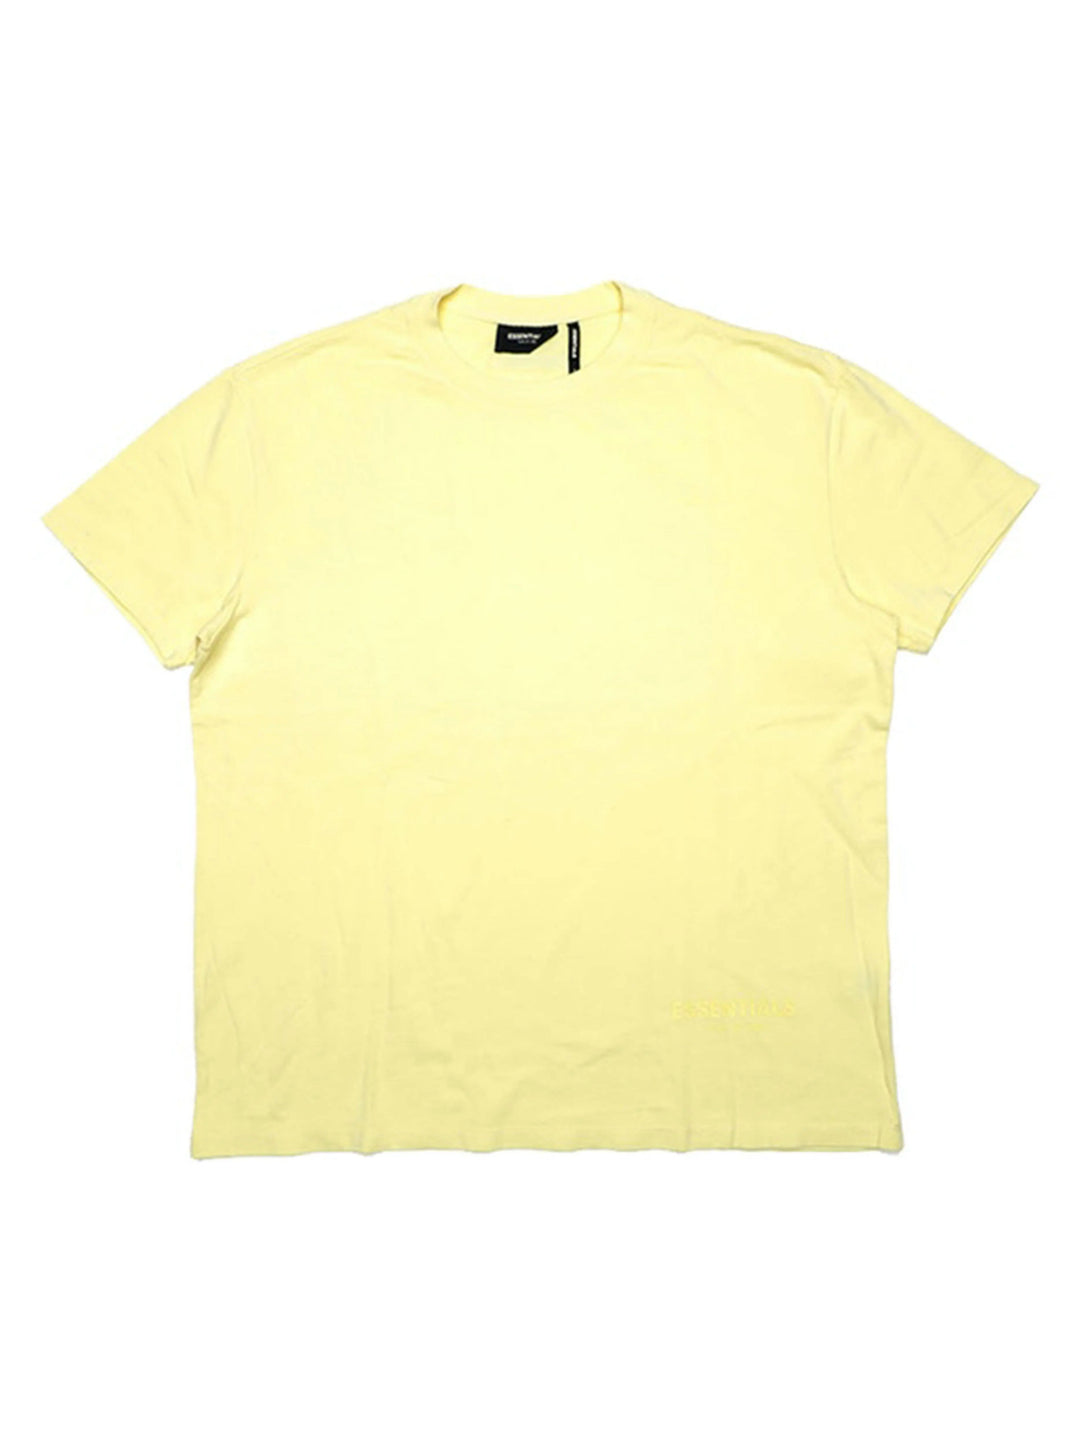 FEAR OF GOD ESSENTIALS Lemonade Boxy T-Shirt Yellow Fear Of God Essentials